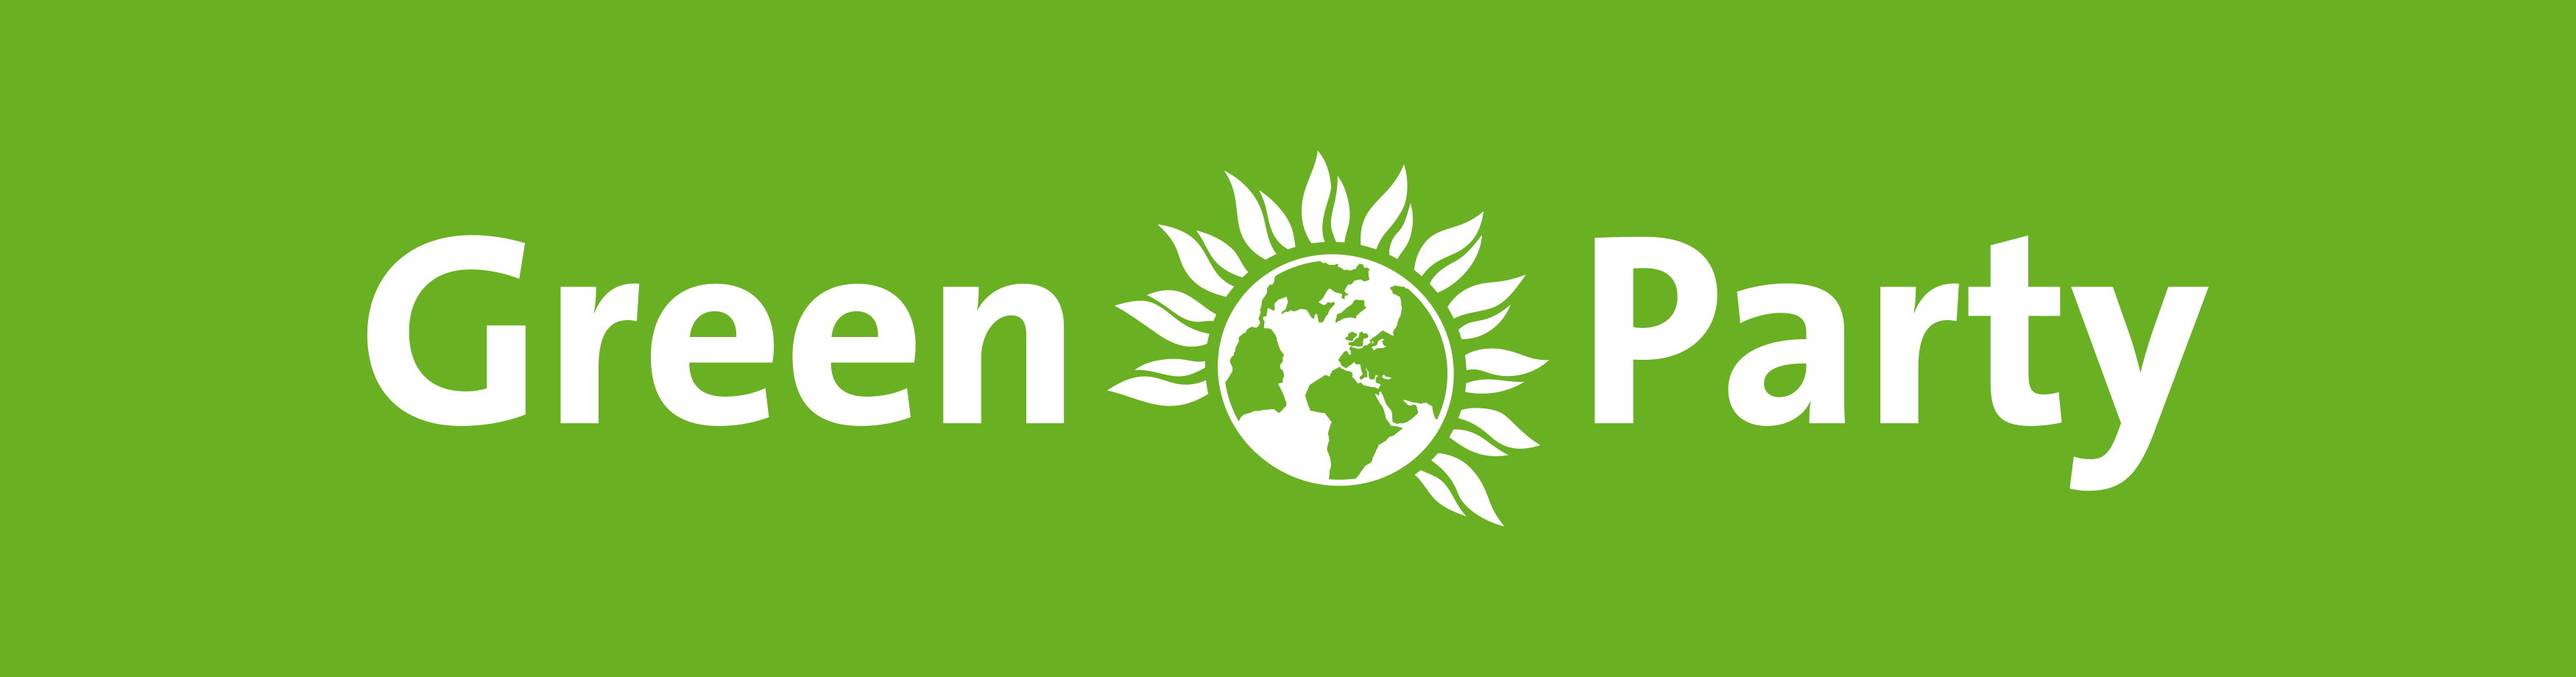 Green Party Logo - Green Party Visual Identity